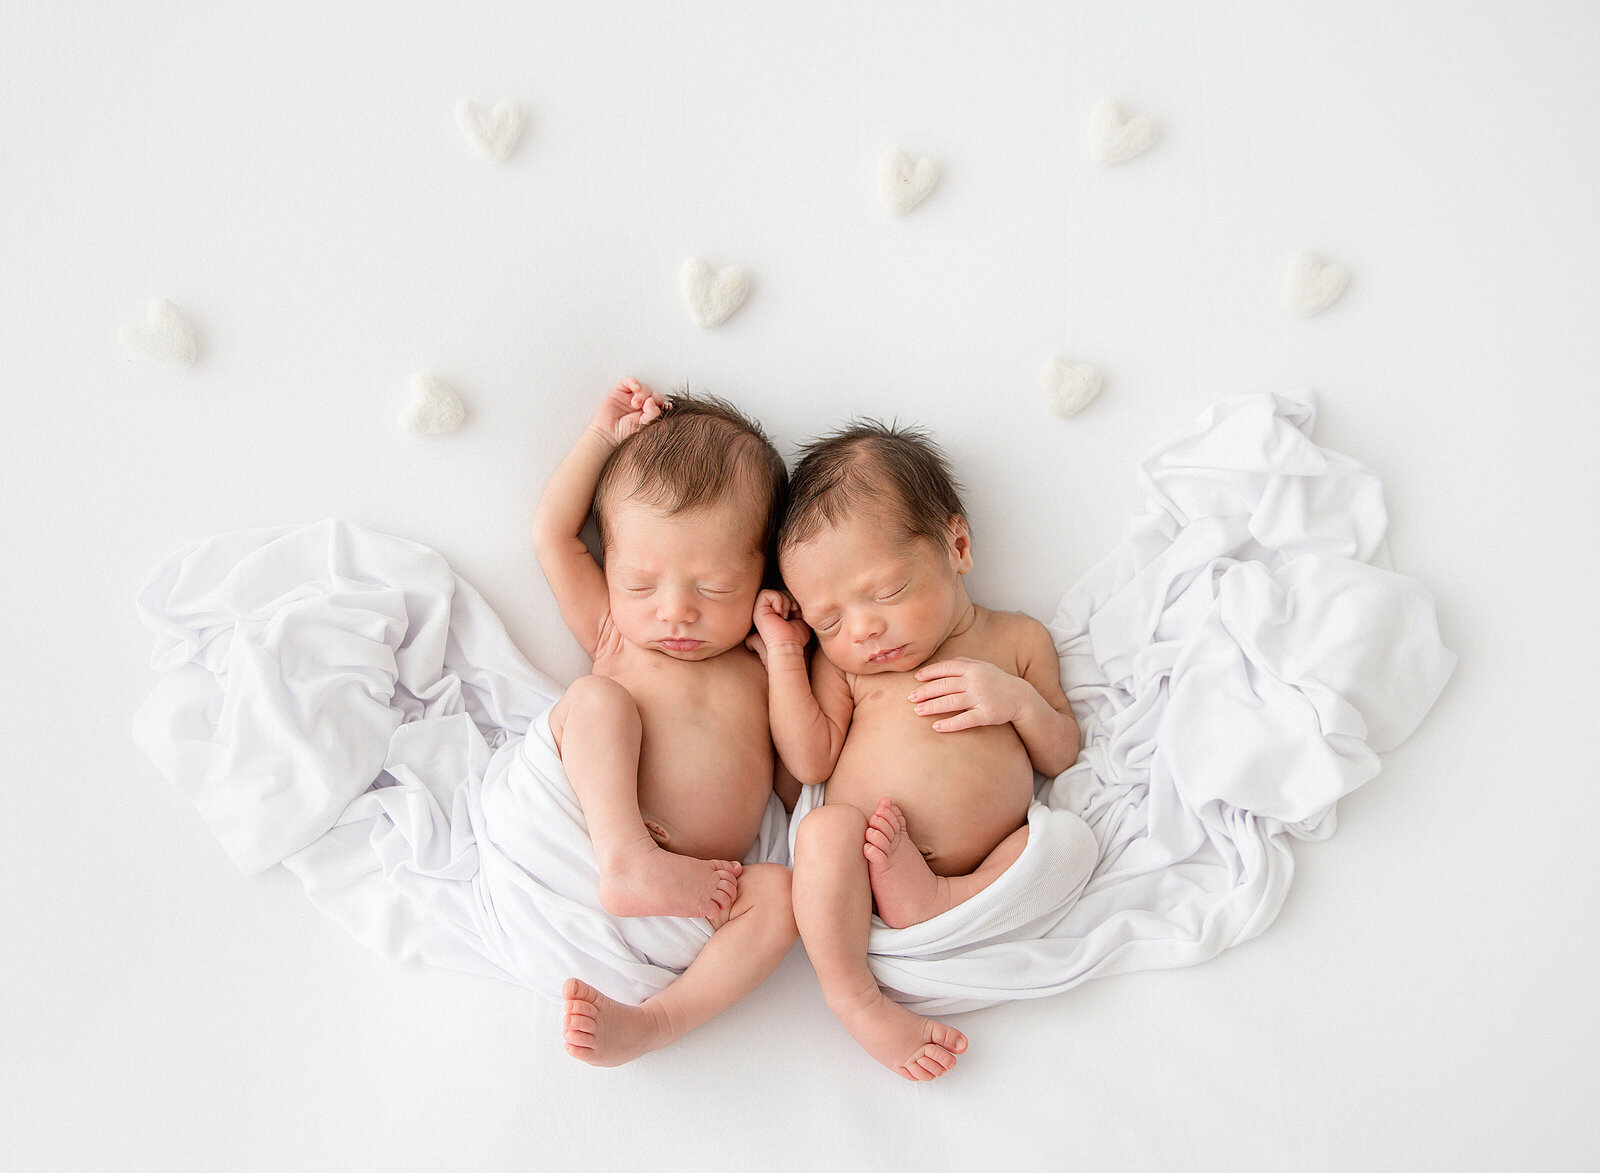 twin newborns with hearts draped around them